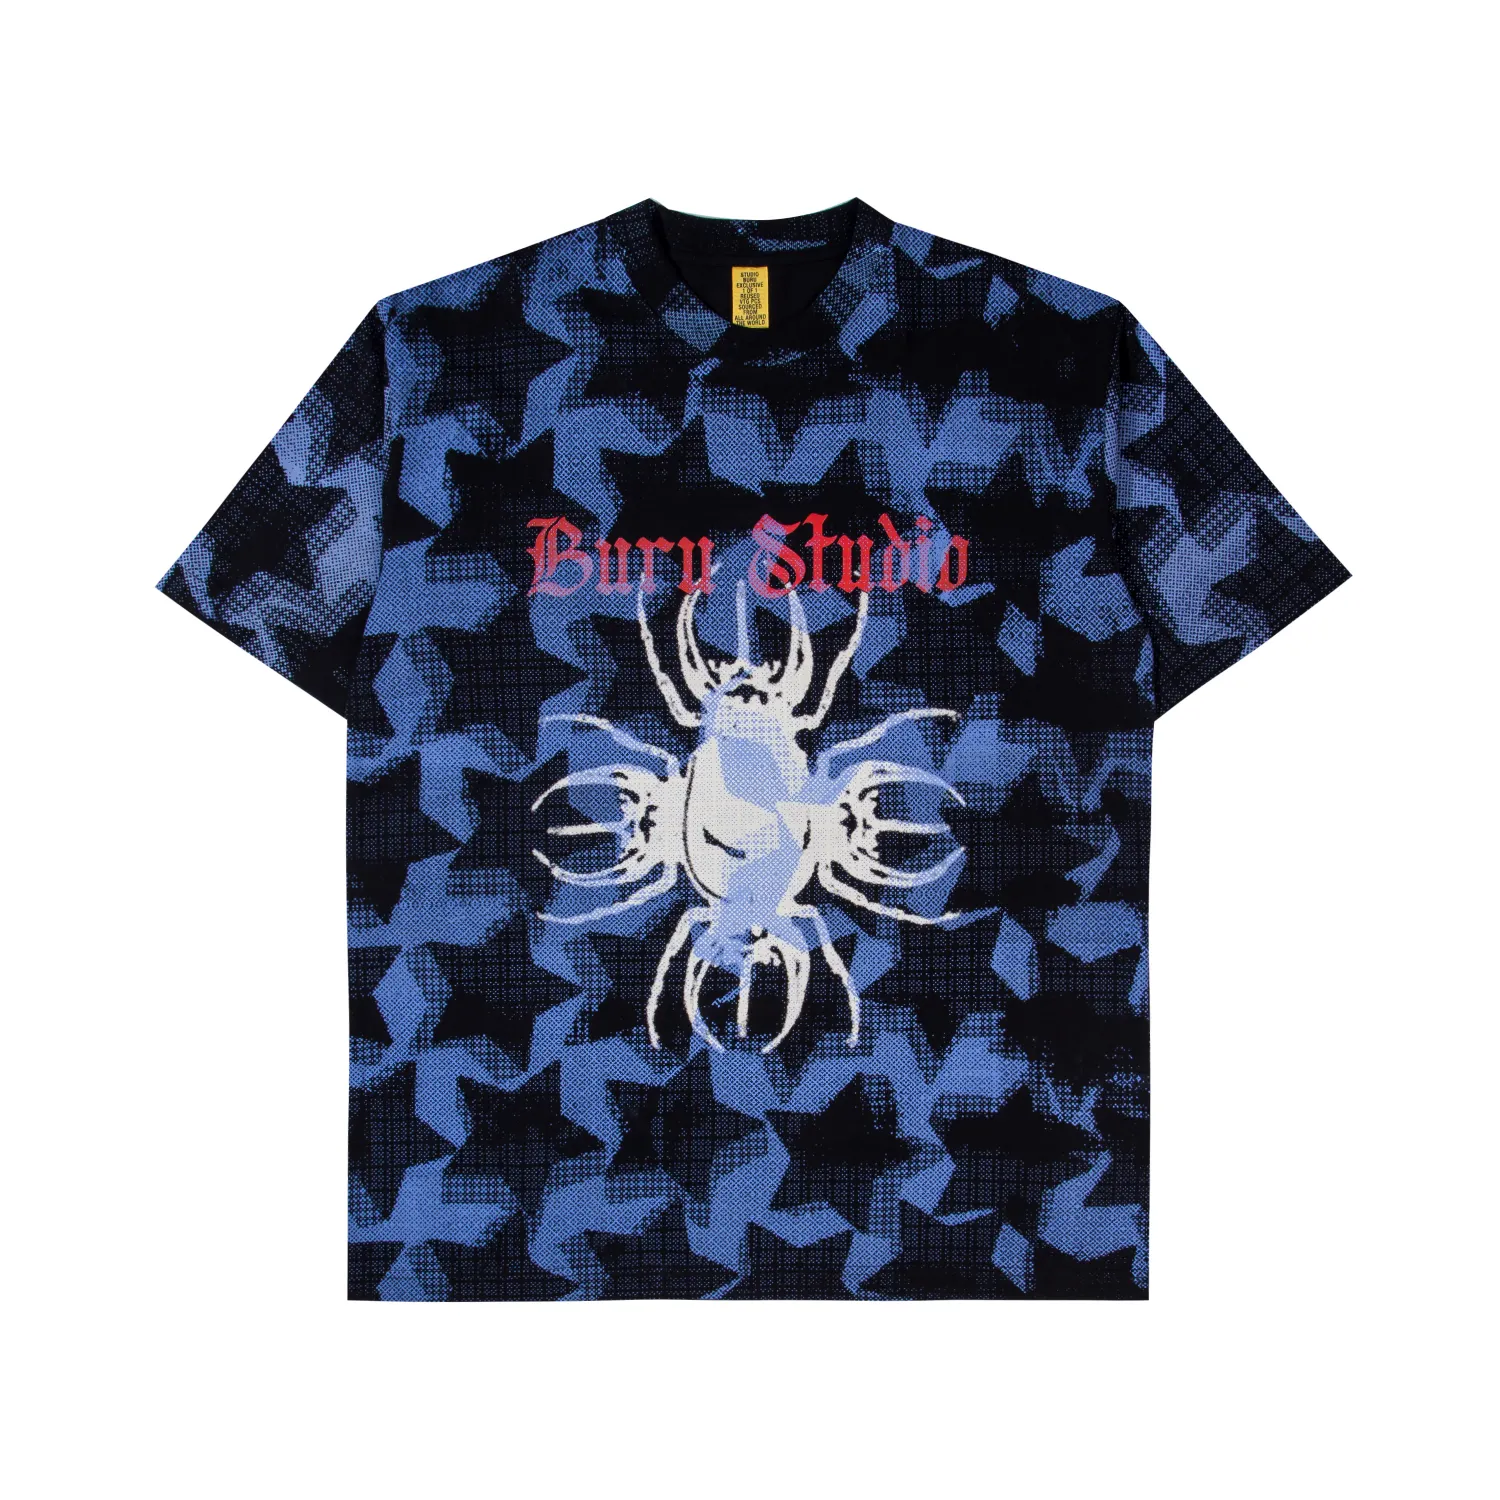 Nirvana T-Shirt in Dark Blue